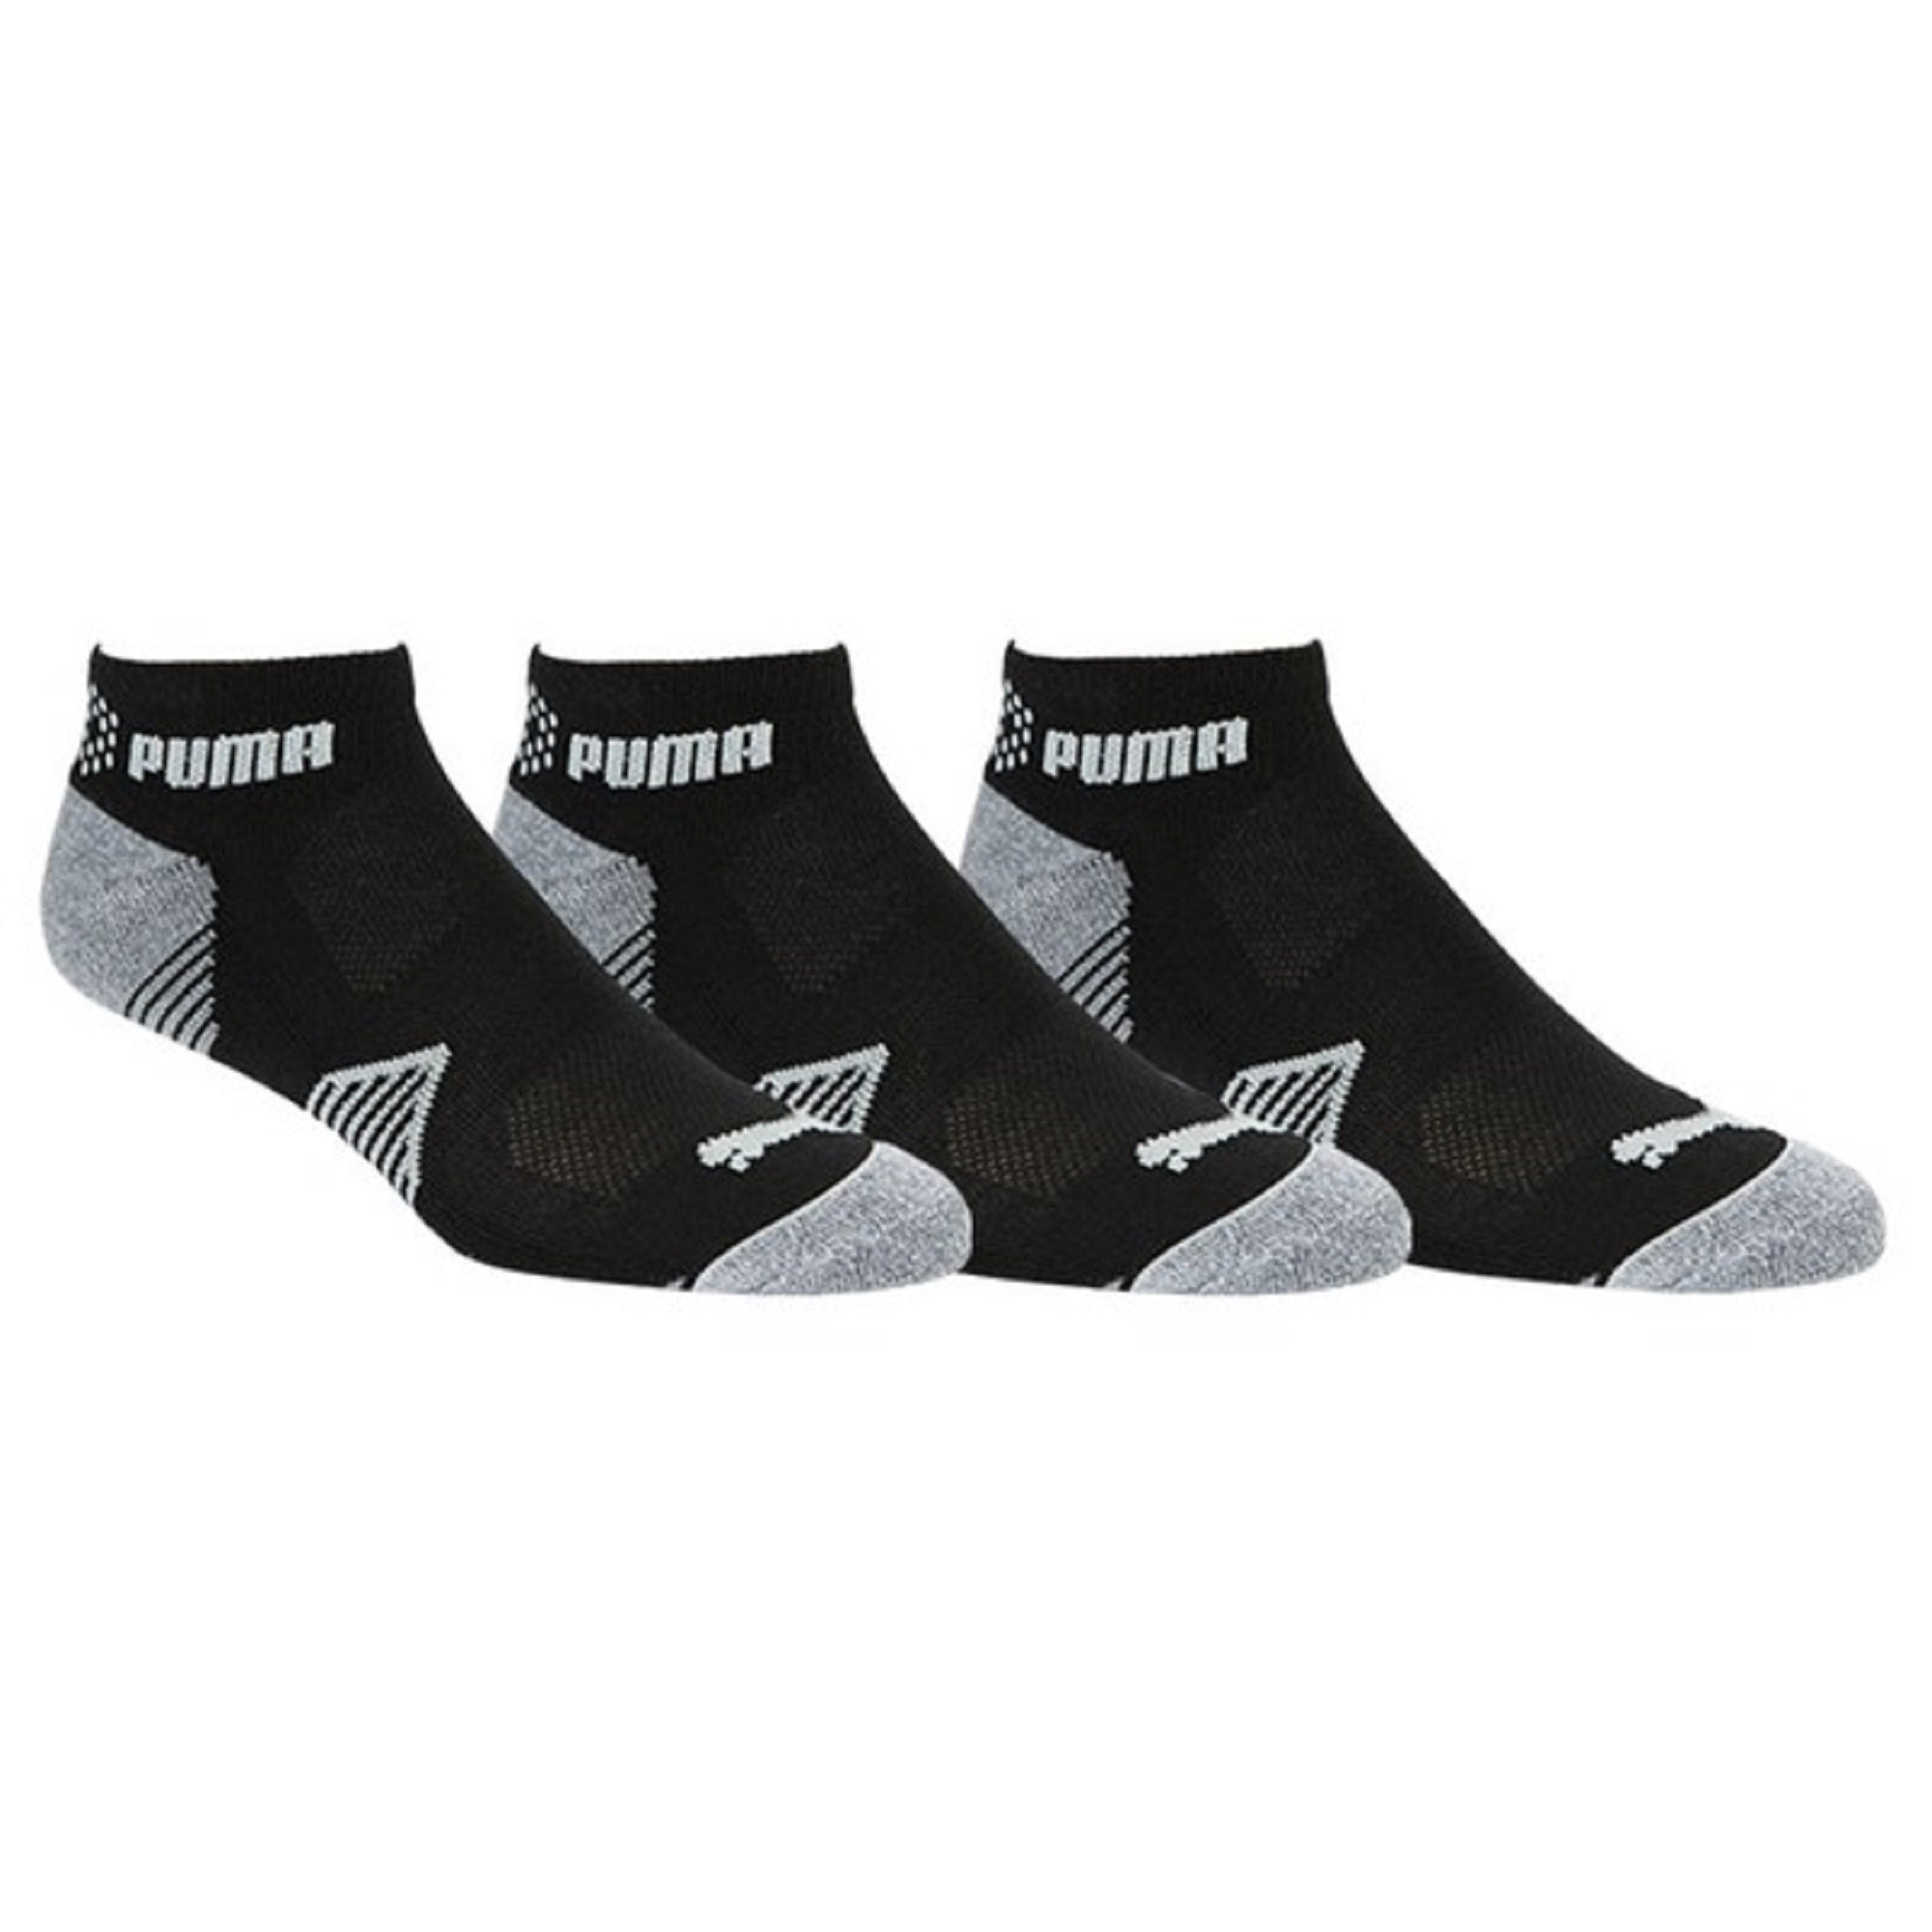 puma-golf-essential-1-4-cut-socks-3-pack-858562-black-02